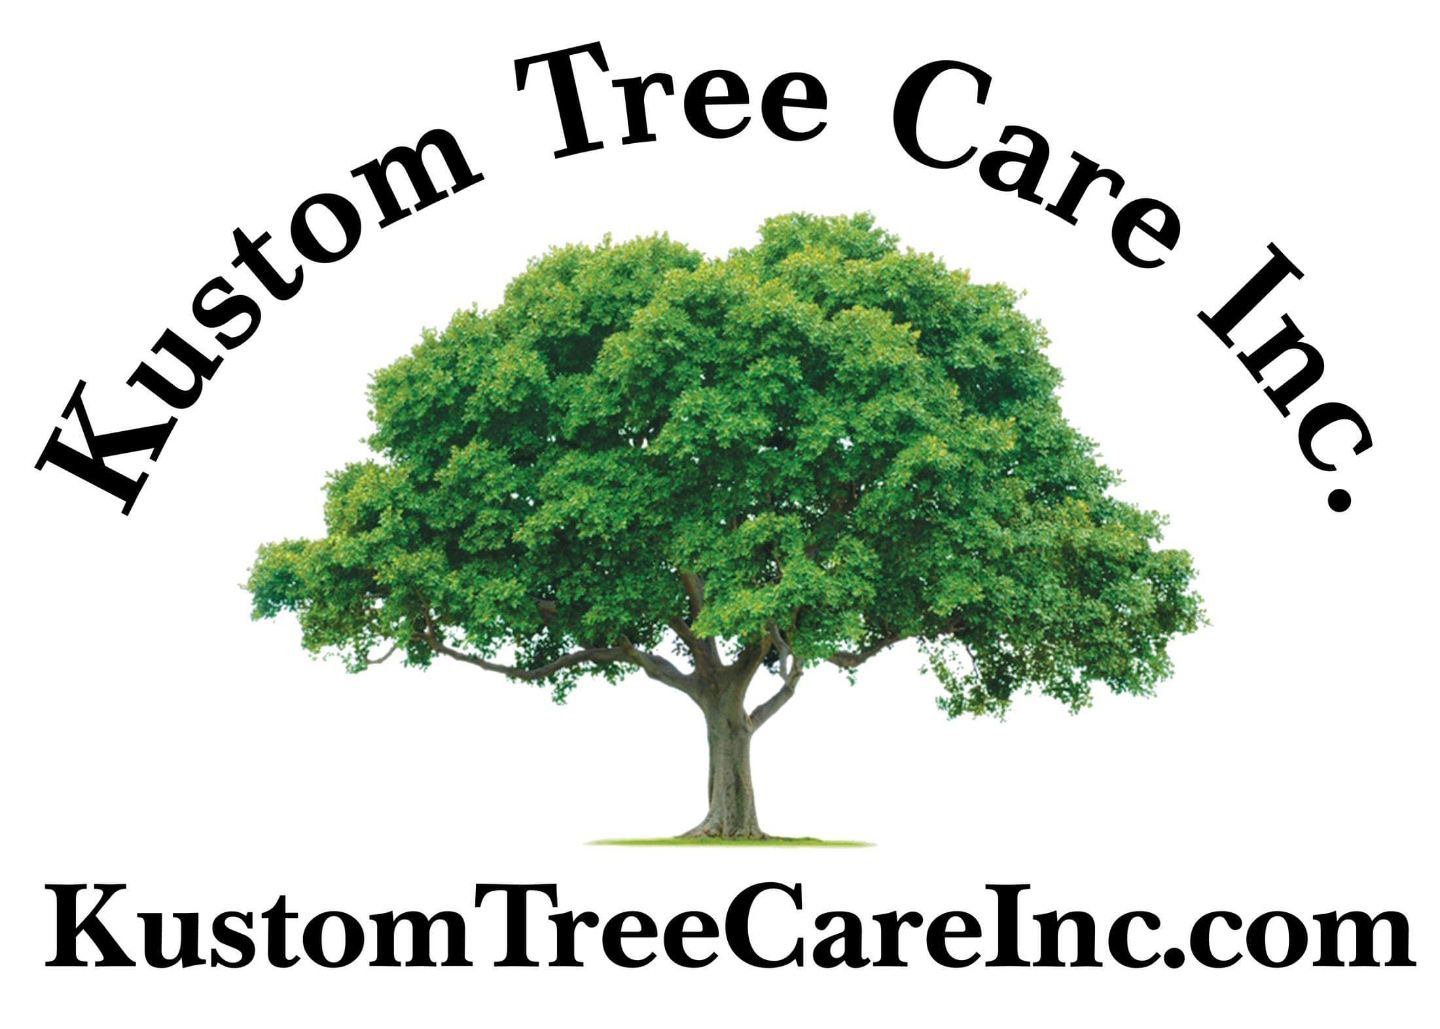 Kustom Tree Care Inc.